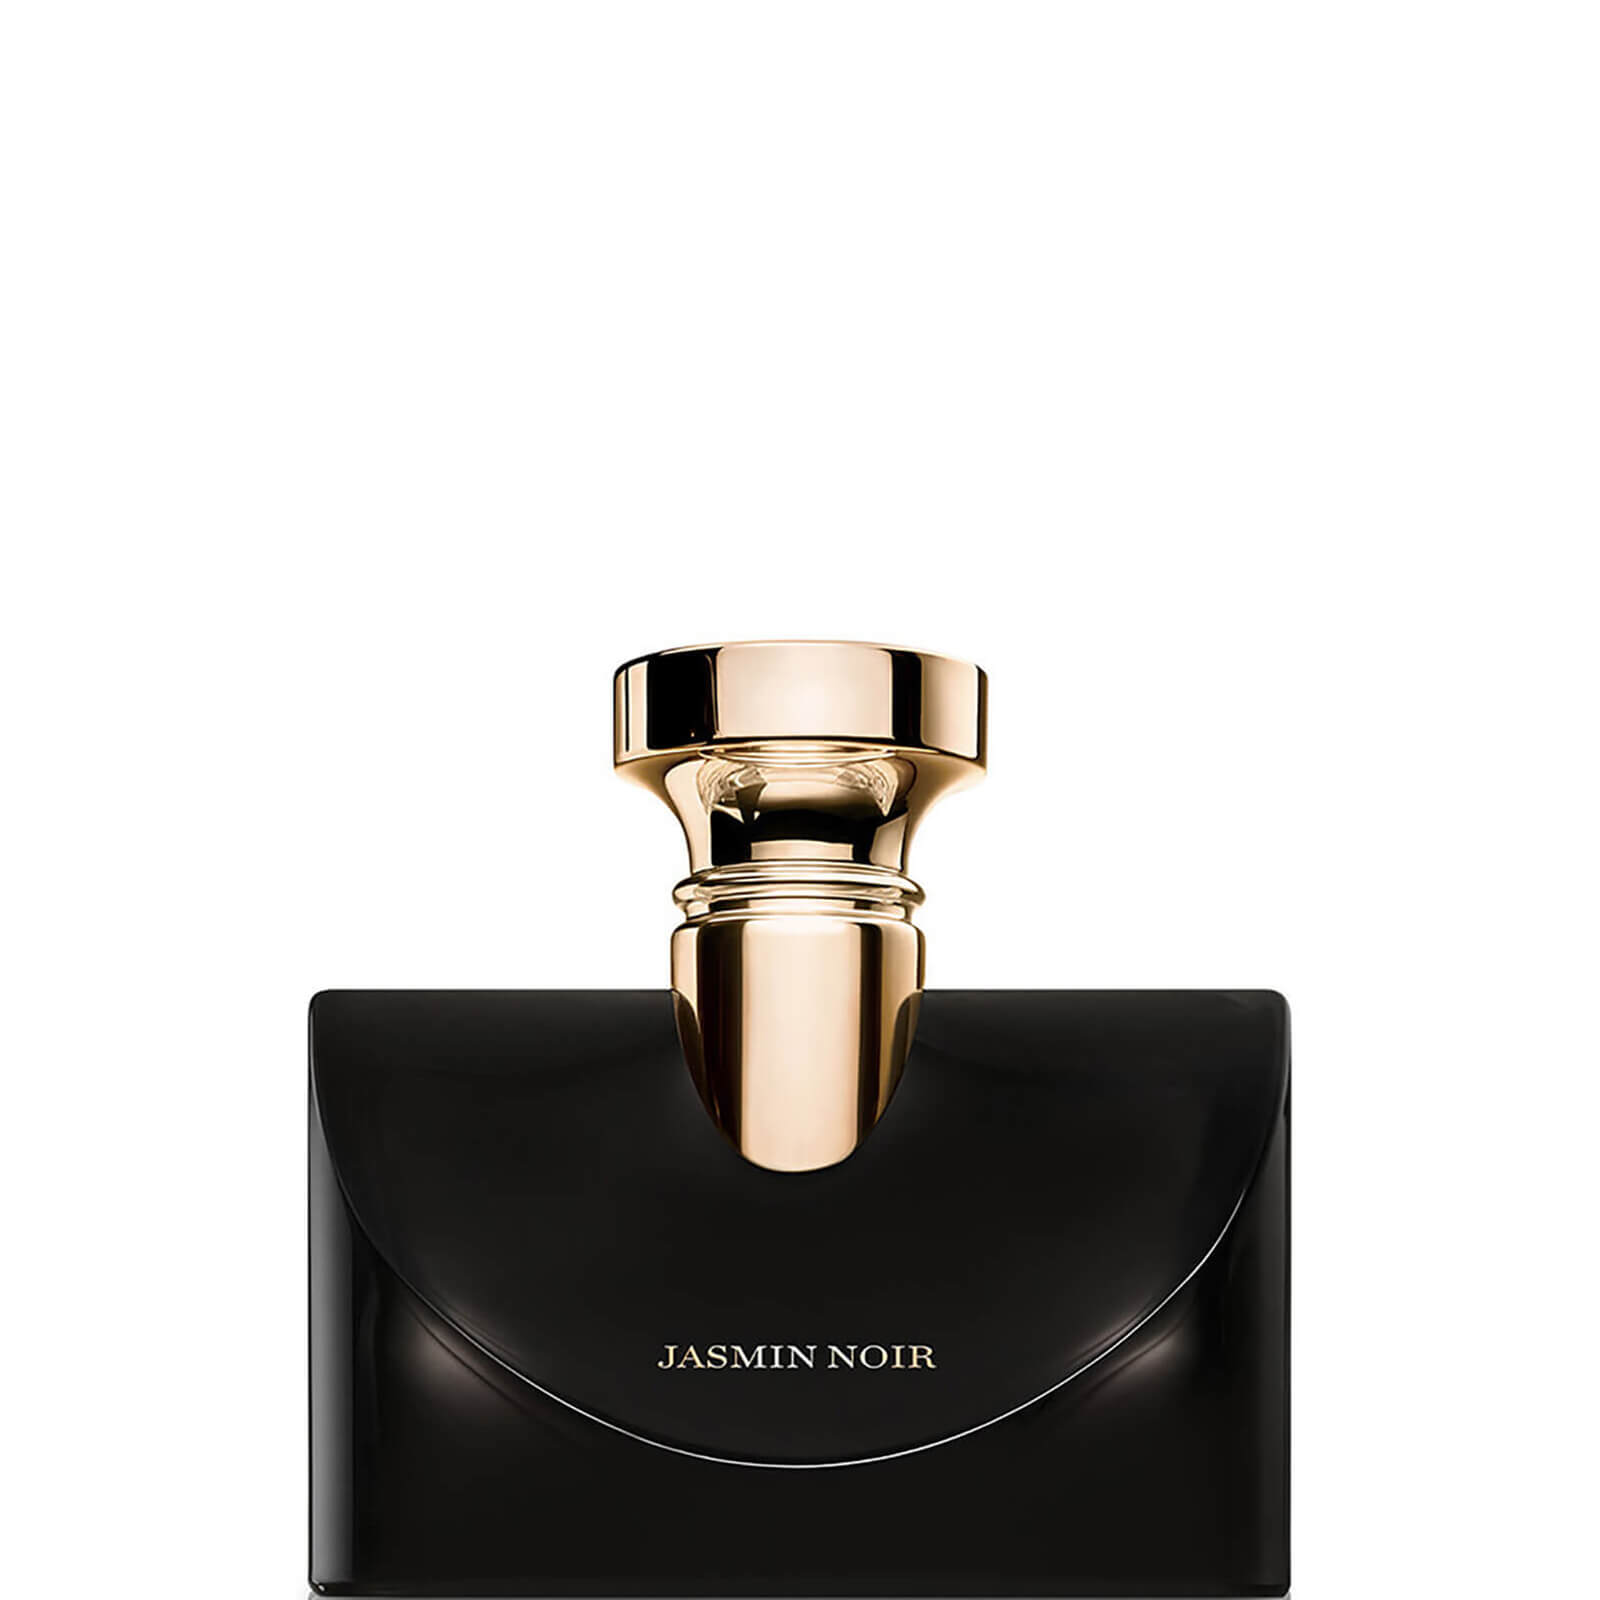 Photos - Women's Fragrance Bvlgari Splendida Jasmin Noir Eau De Parfum 50ml 97735 